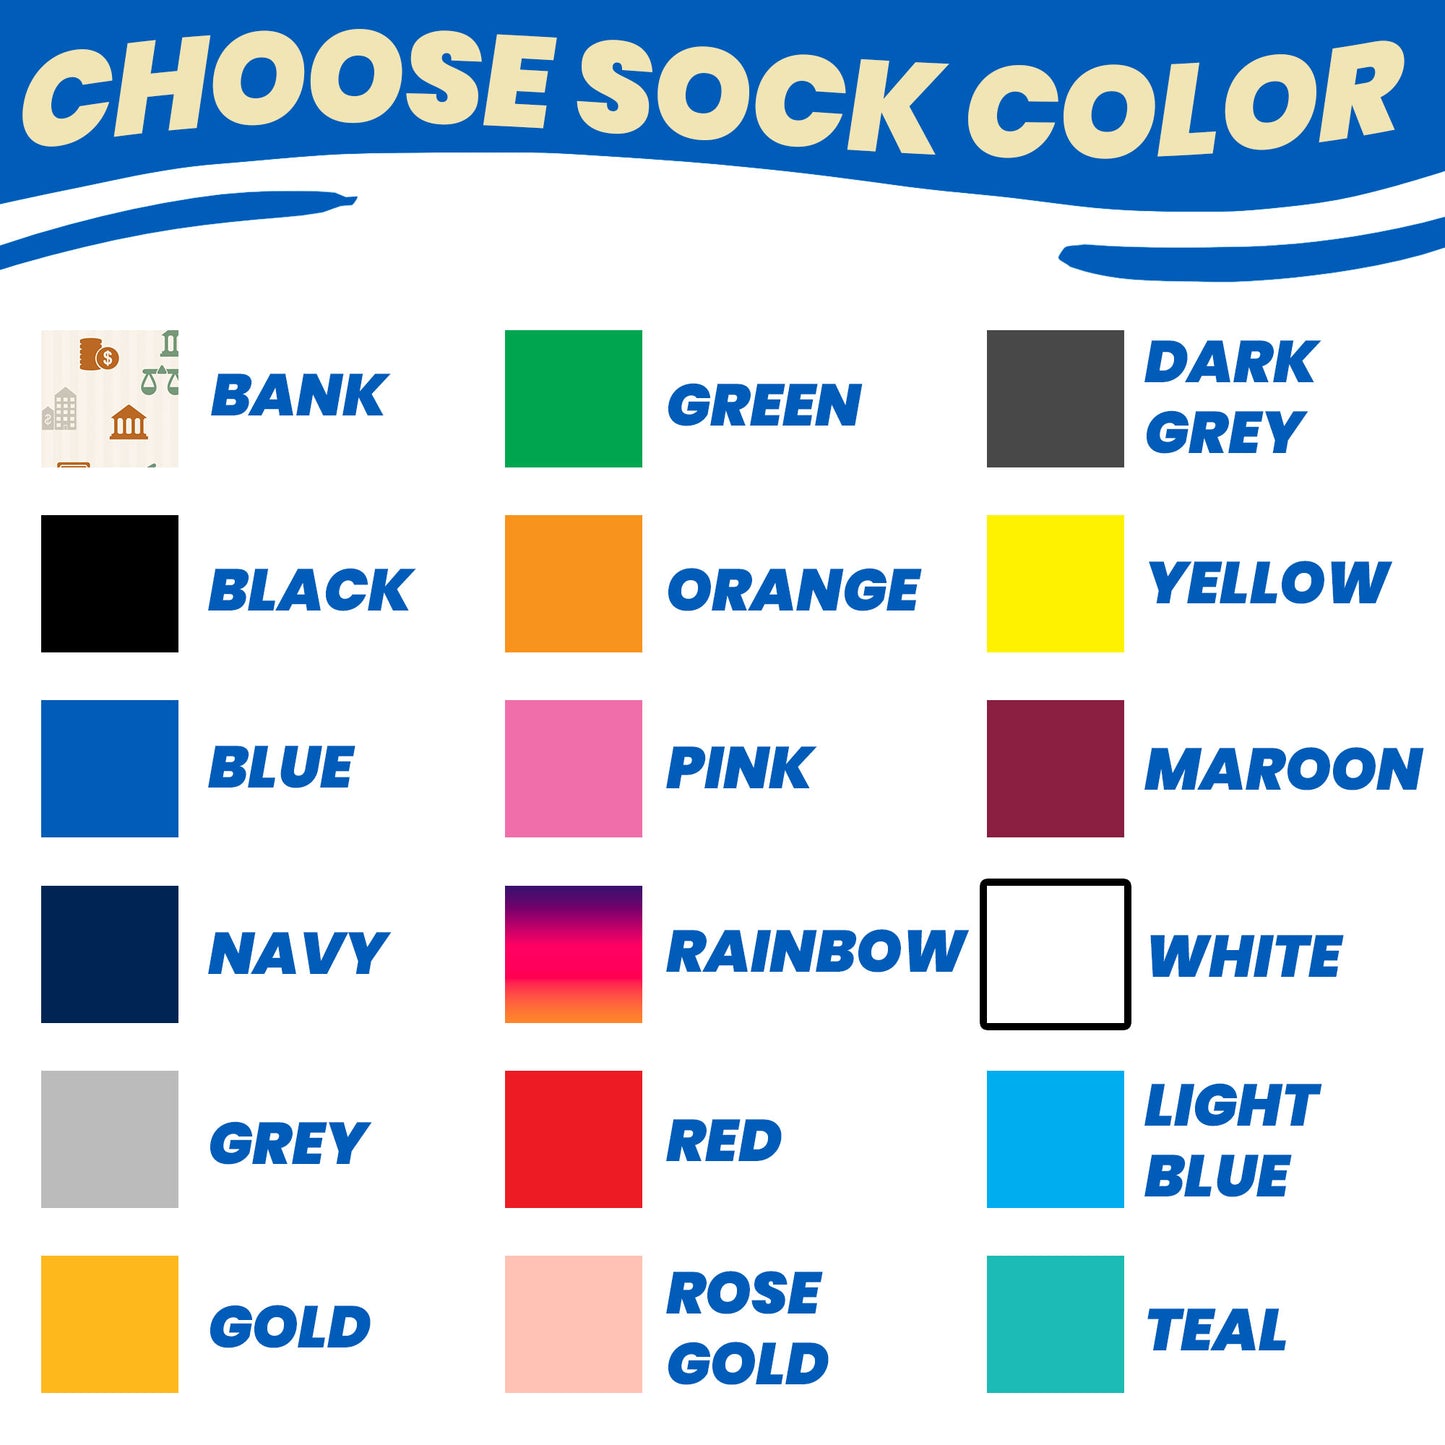 baking gift socks showing all sock color options